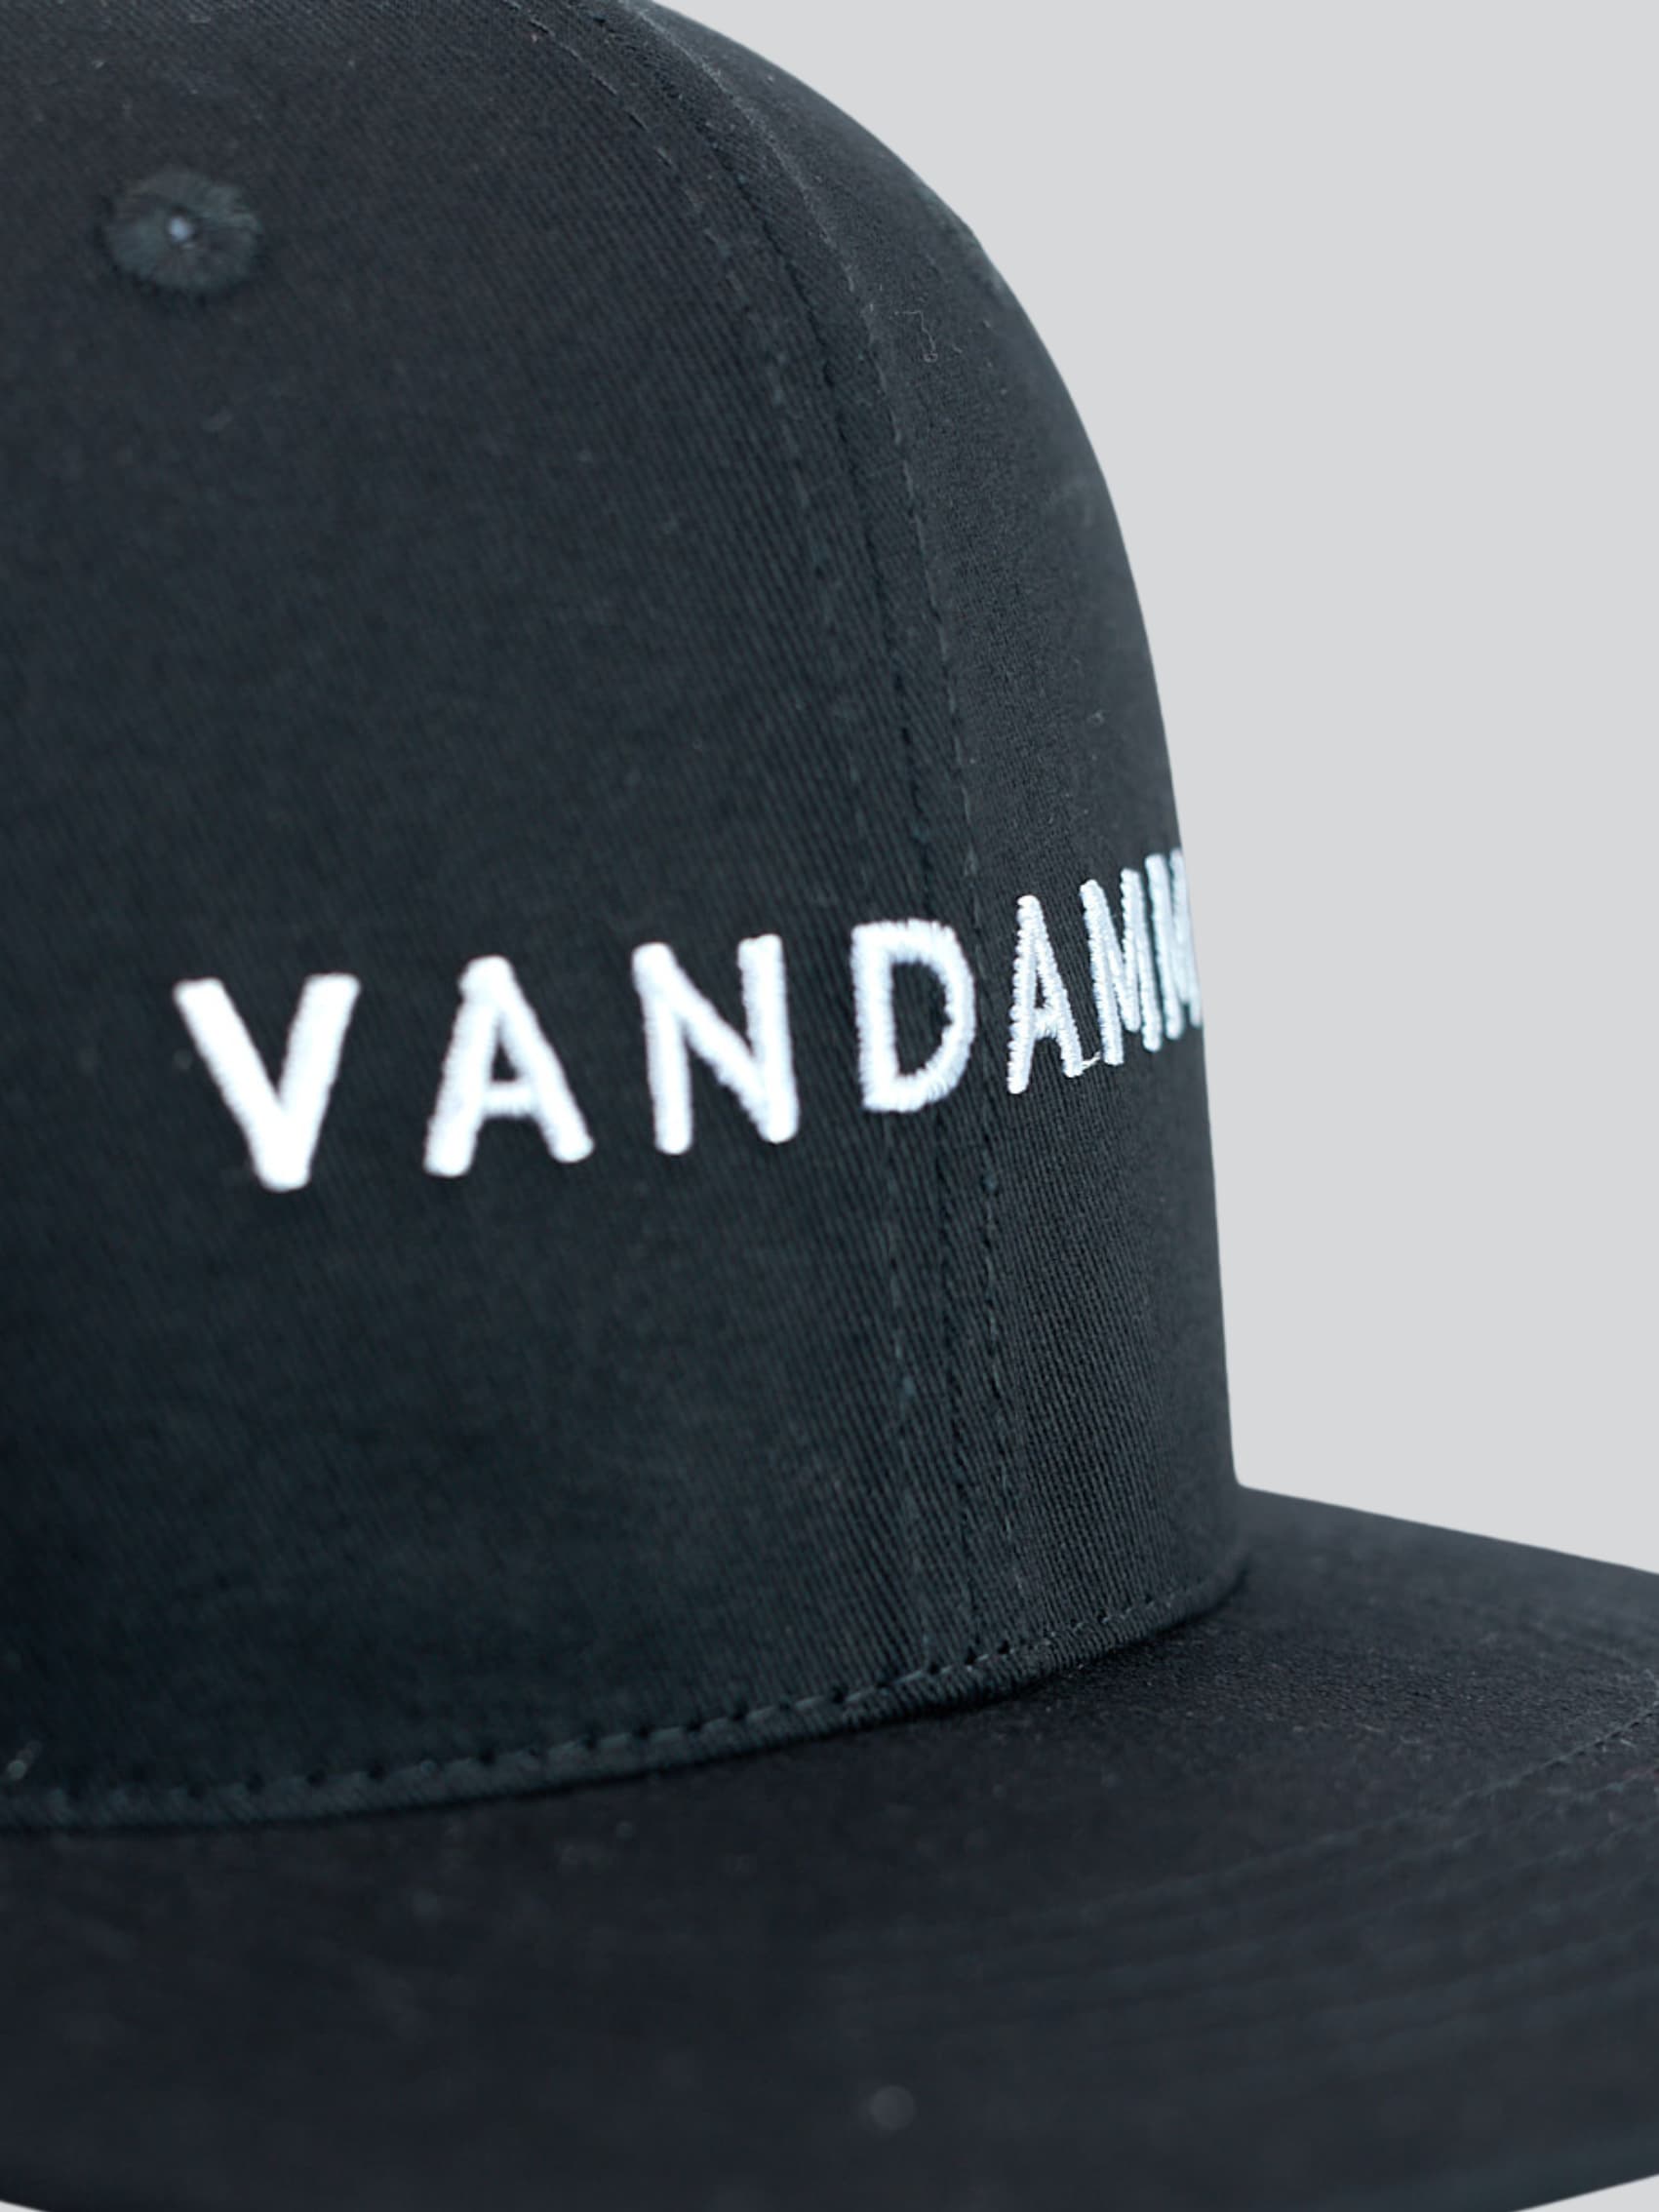 VANDAMM® Sportswear & Lifestyle Snap Back Baseball Cap Black